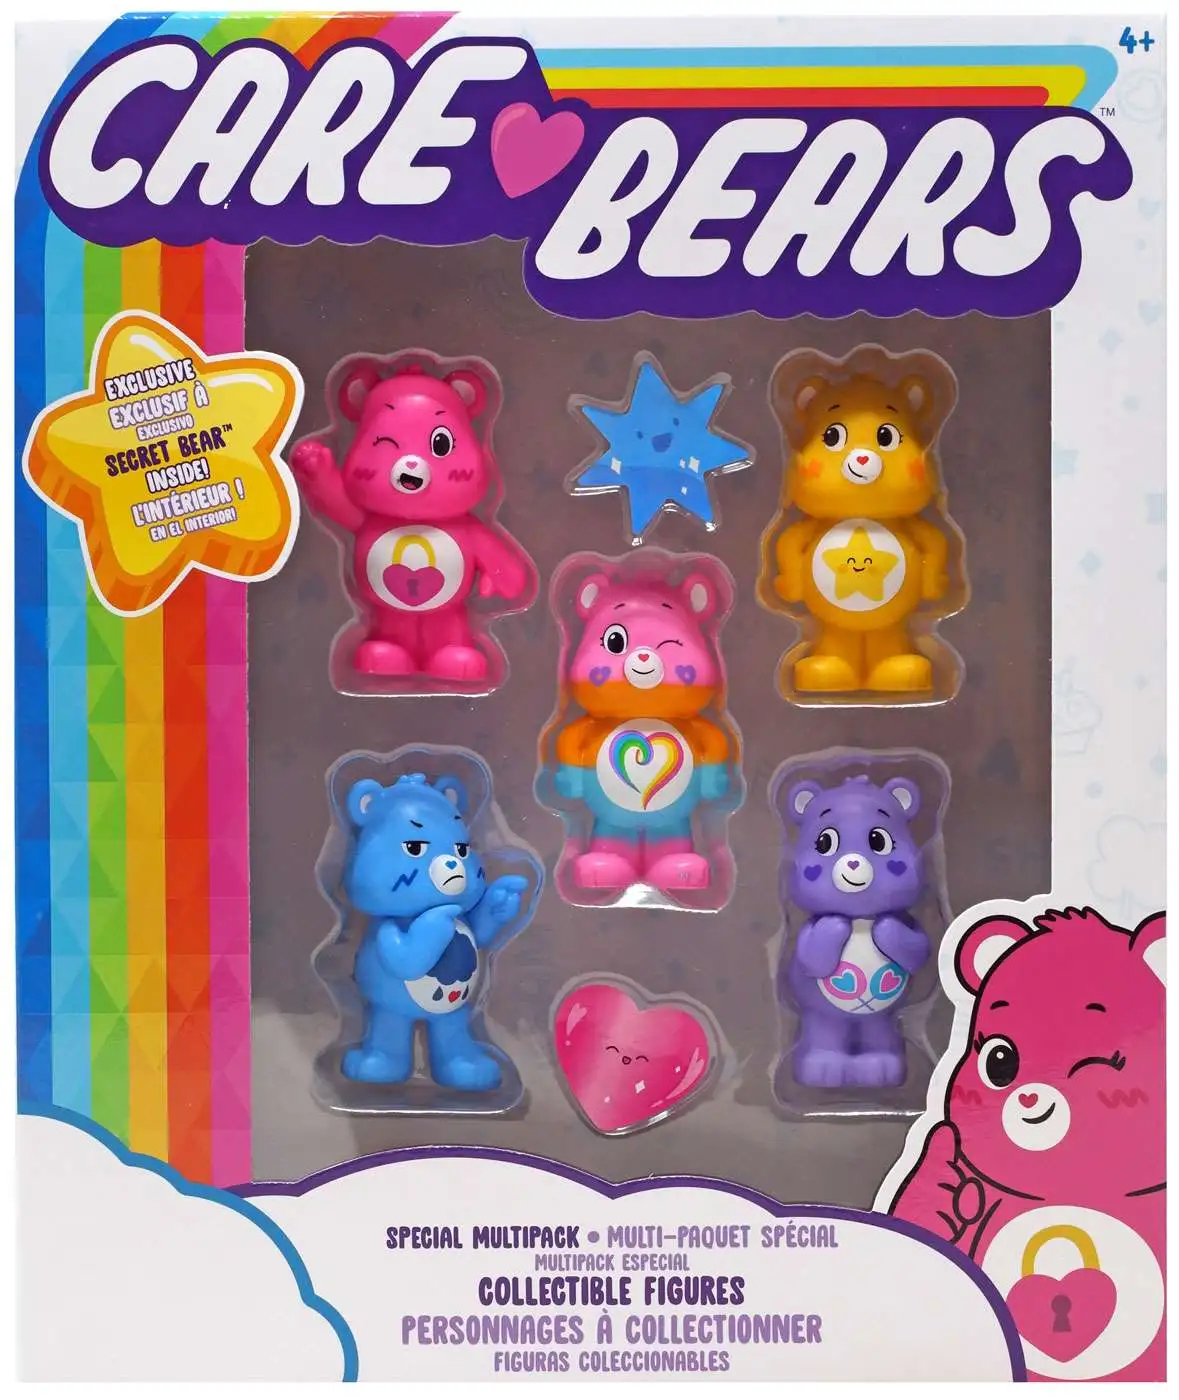 Share Bear+ Set of 4 Grumpy Bear Care Bears Collectible Mini Action Figures 